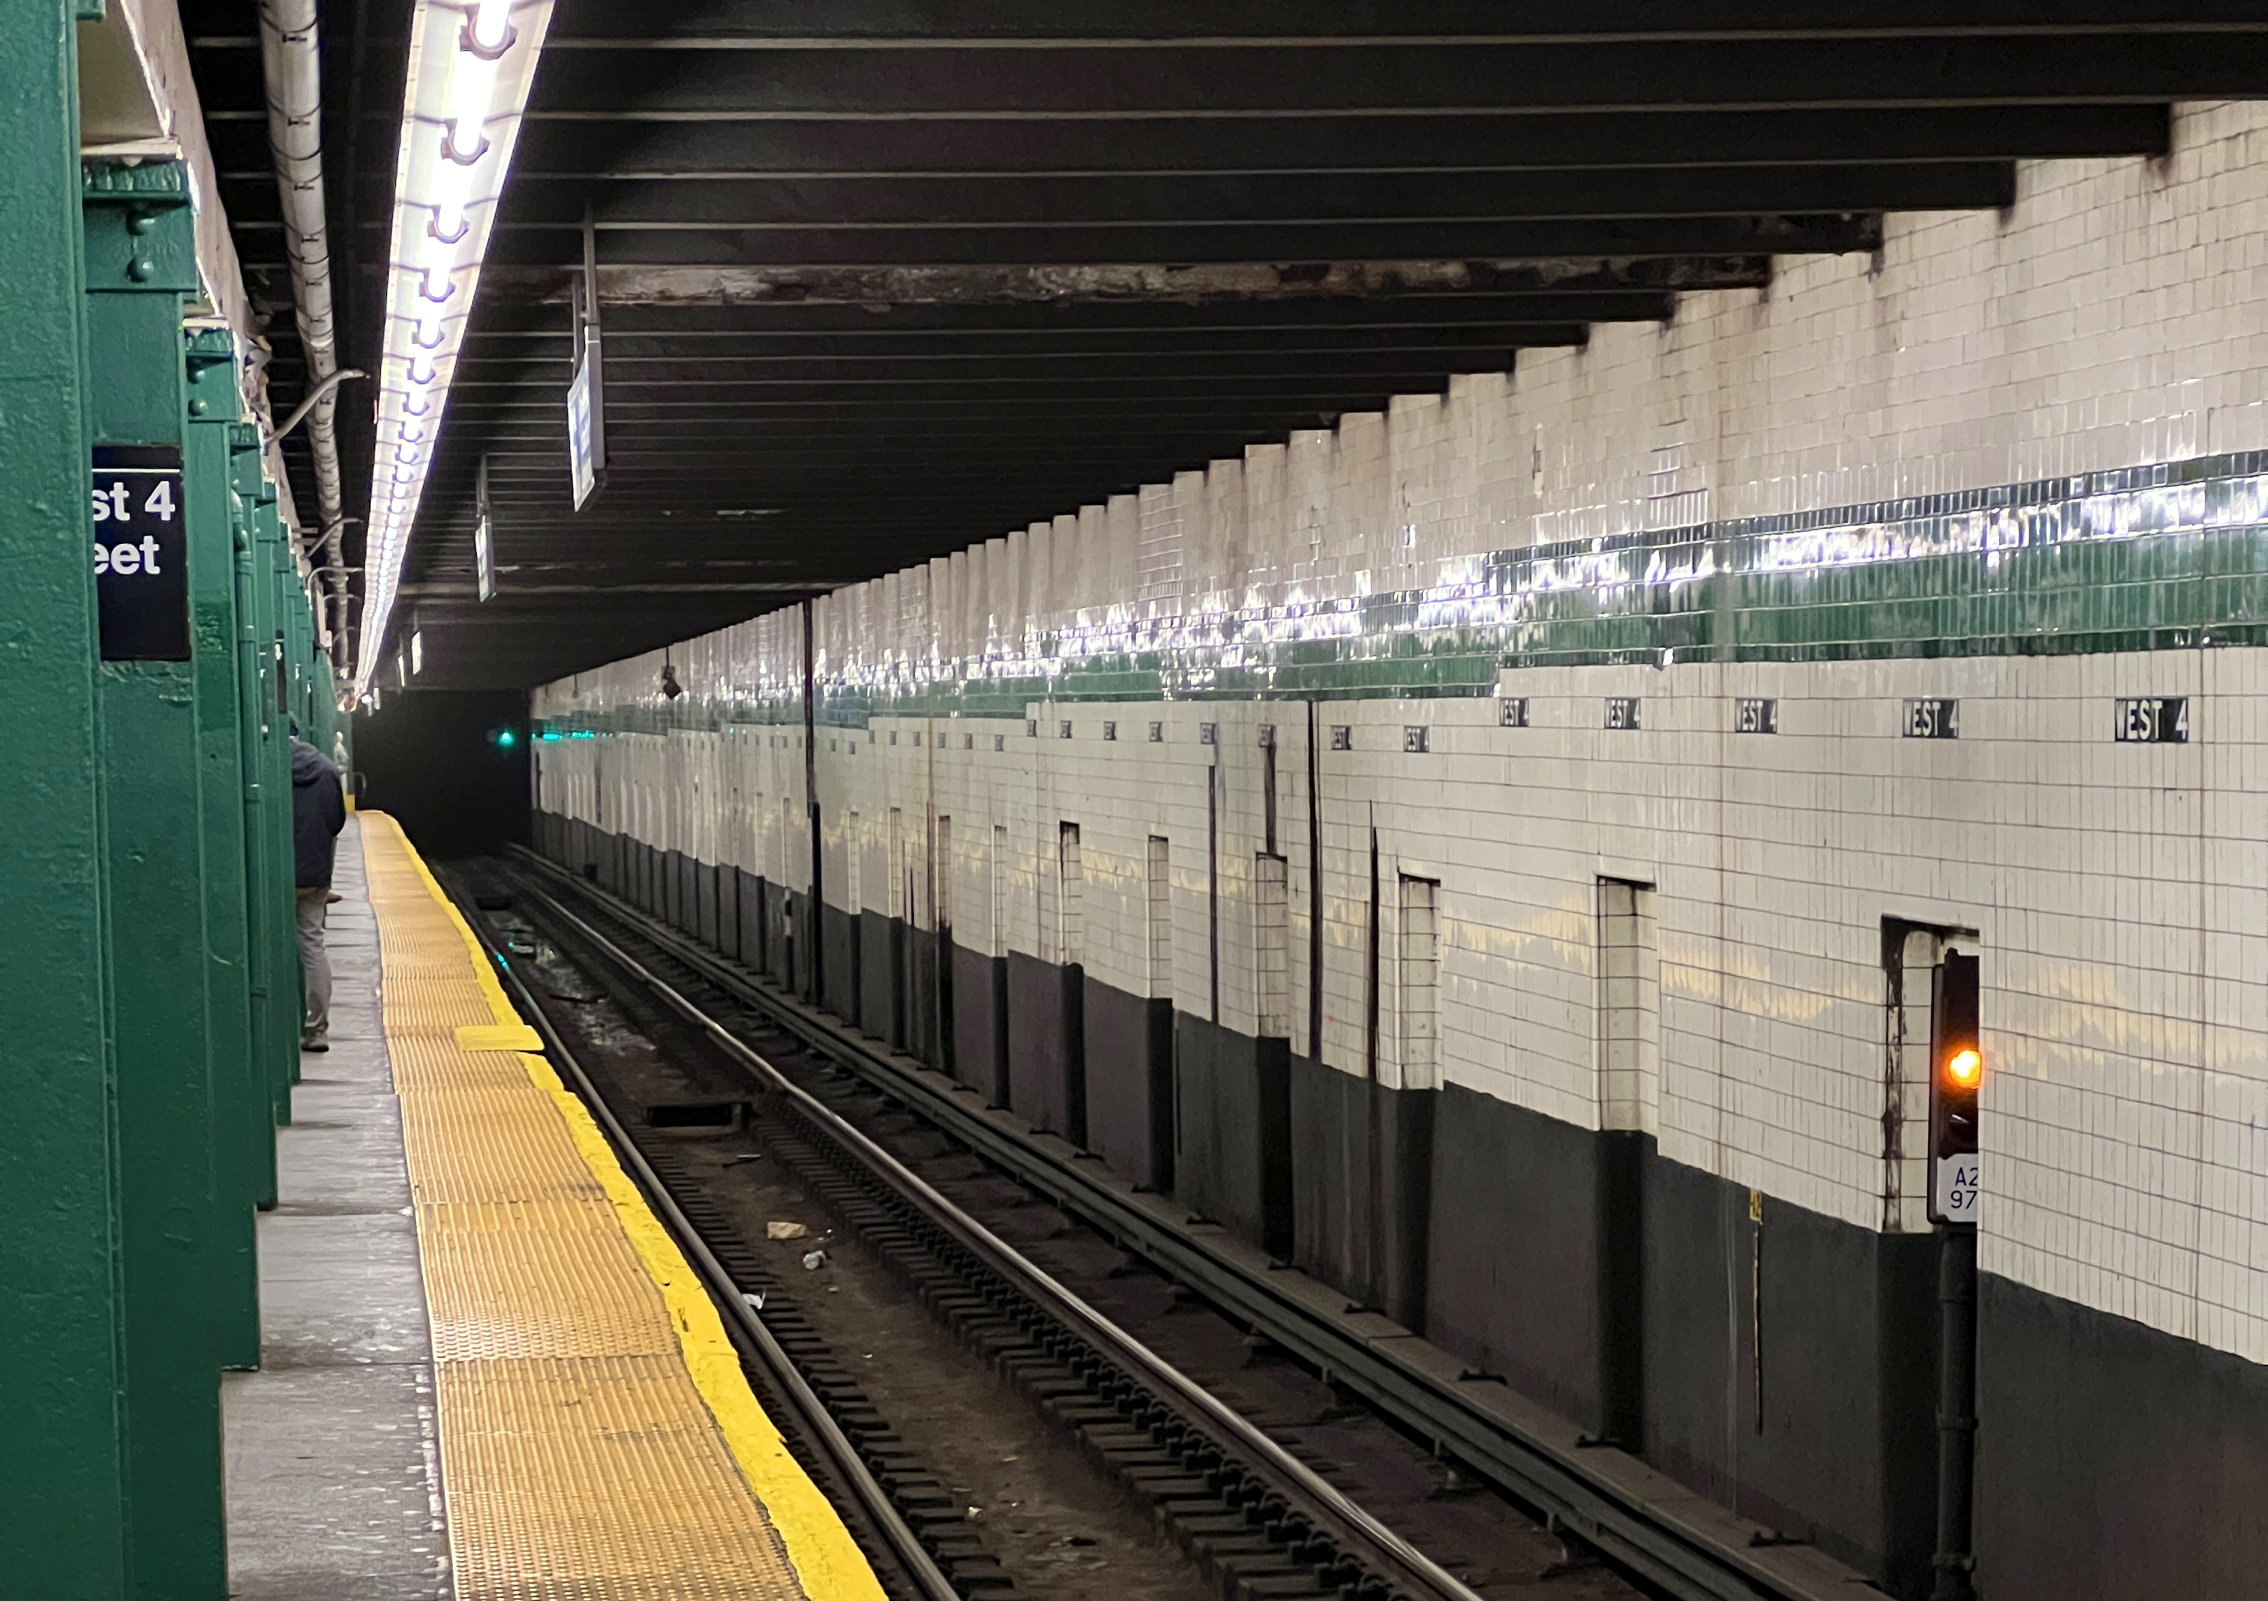 U-Bahnstation 4. Strasse / Washington Square